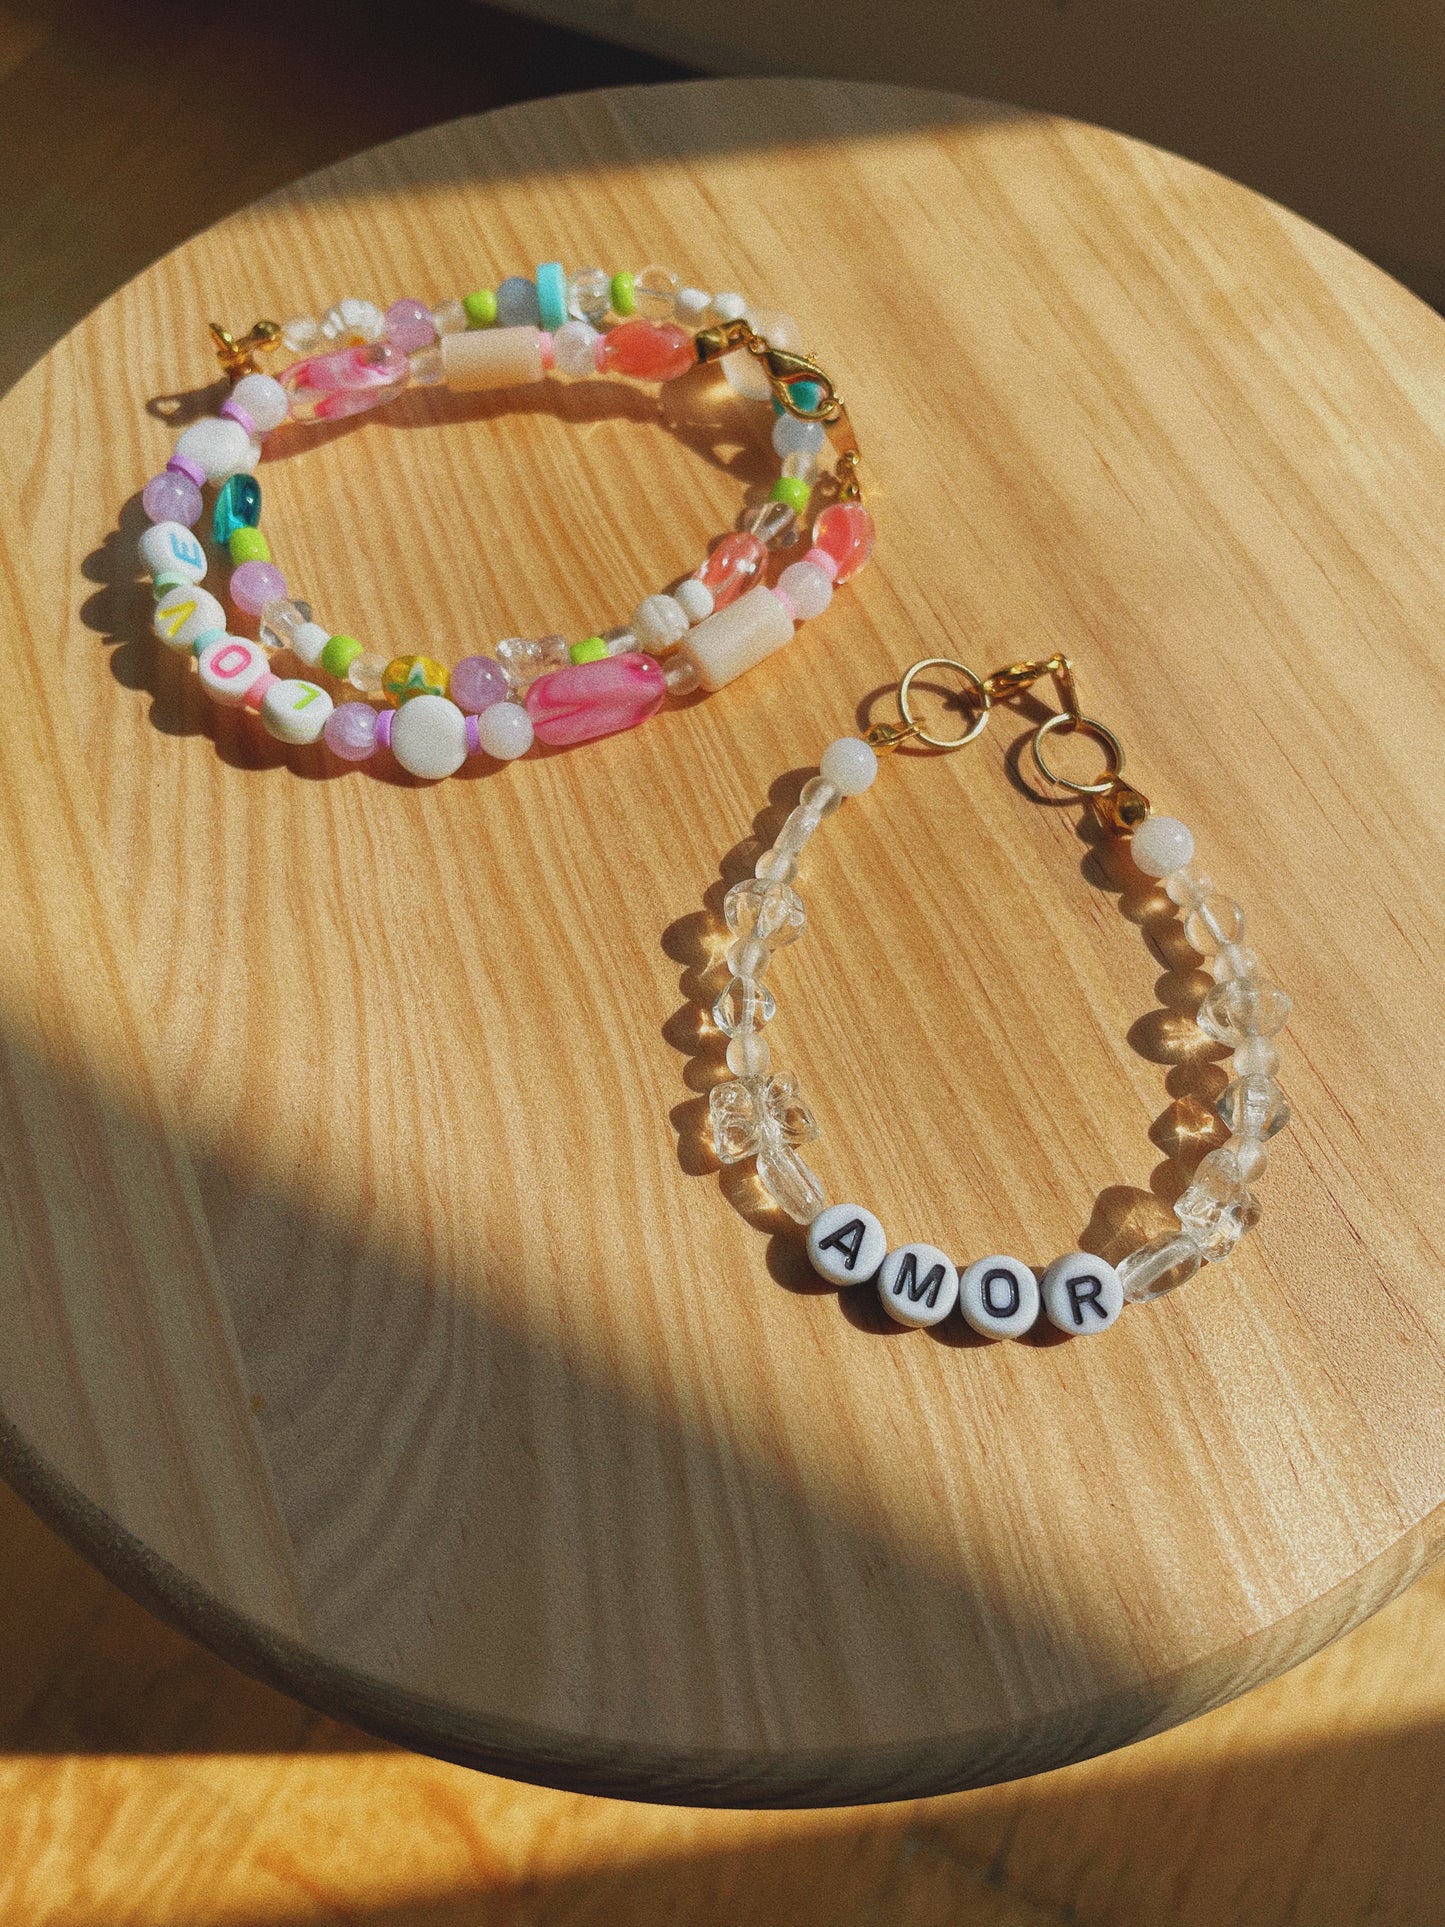 Customized bracelet